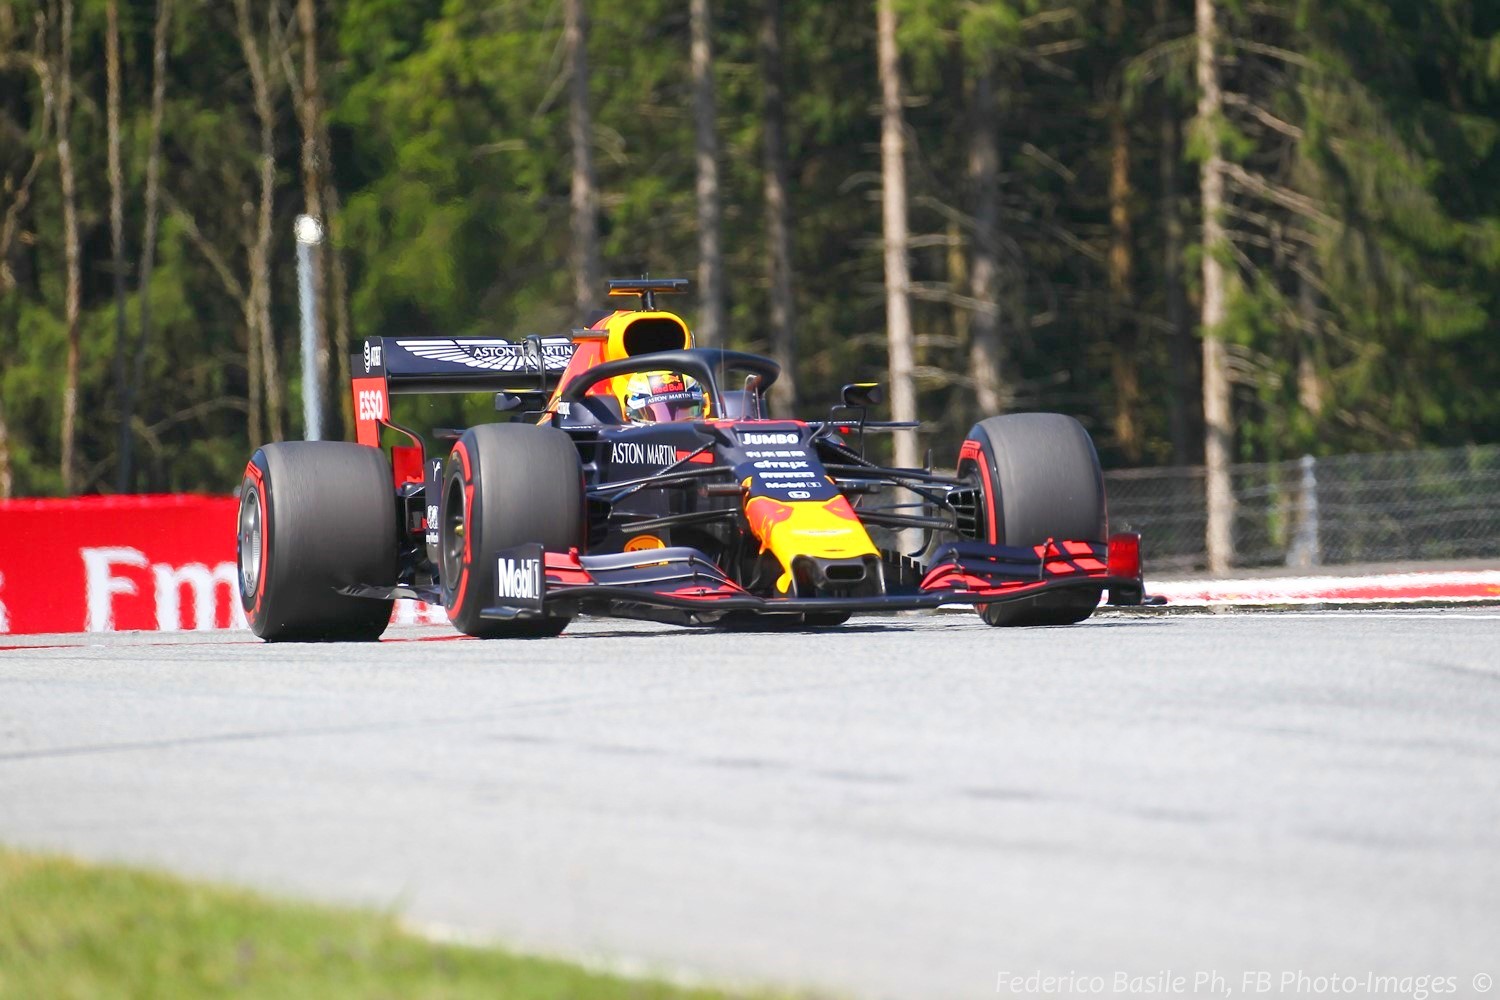 Max Verstappen winning in Austria